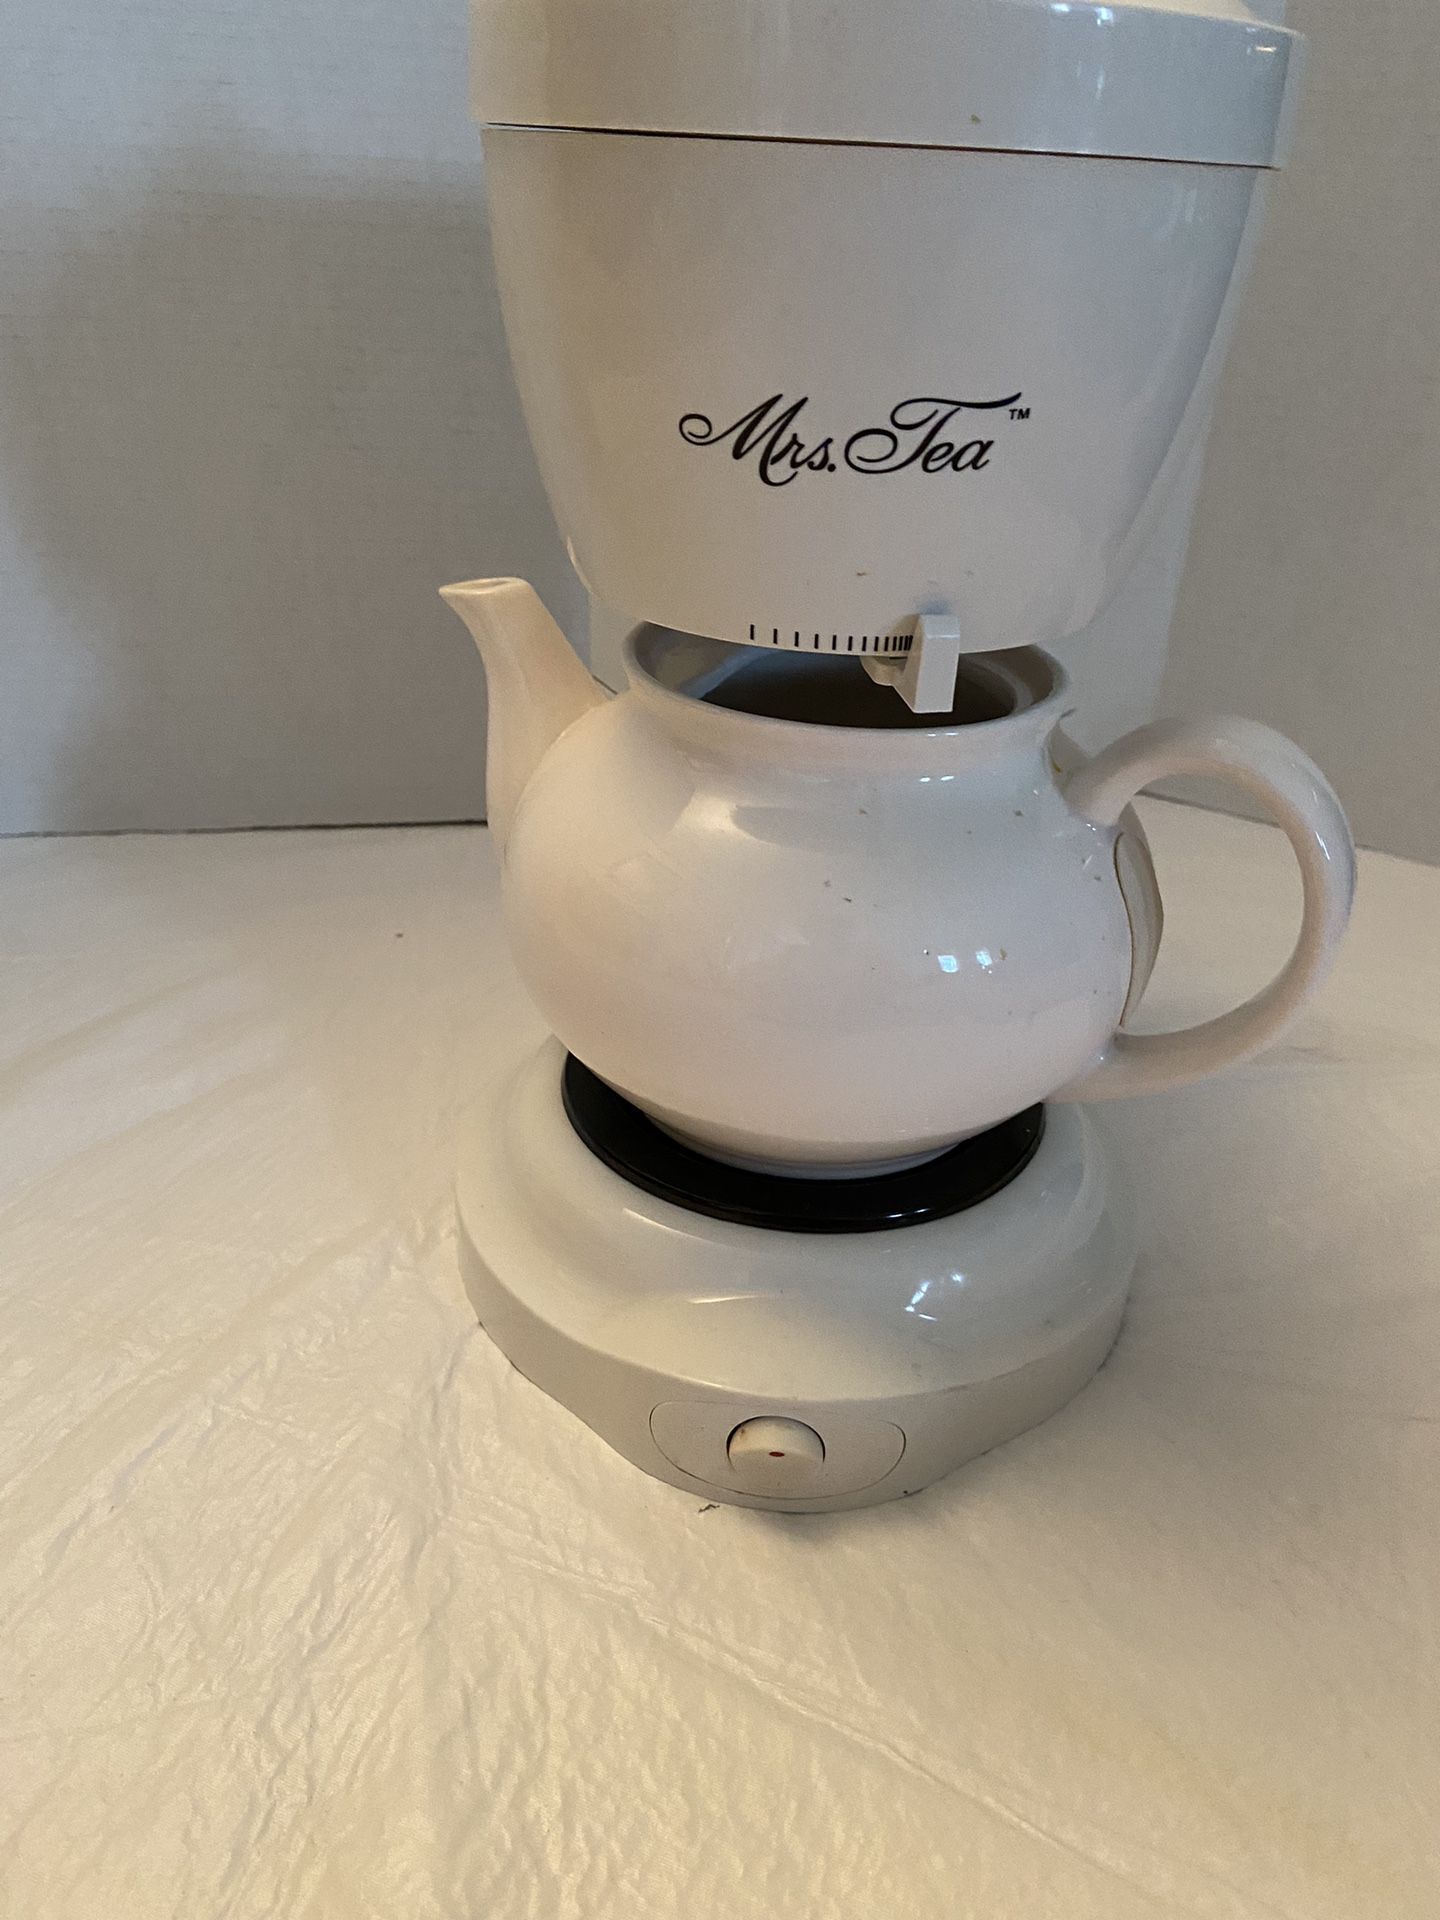 Mrs Tea electric Automatic Drip Hot Tea Maker